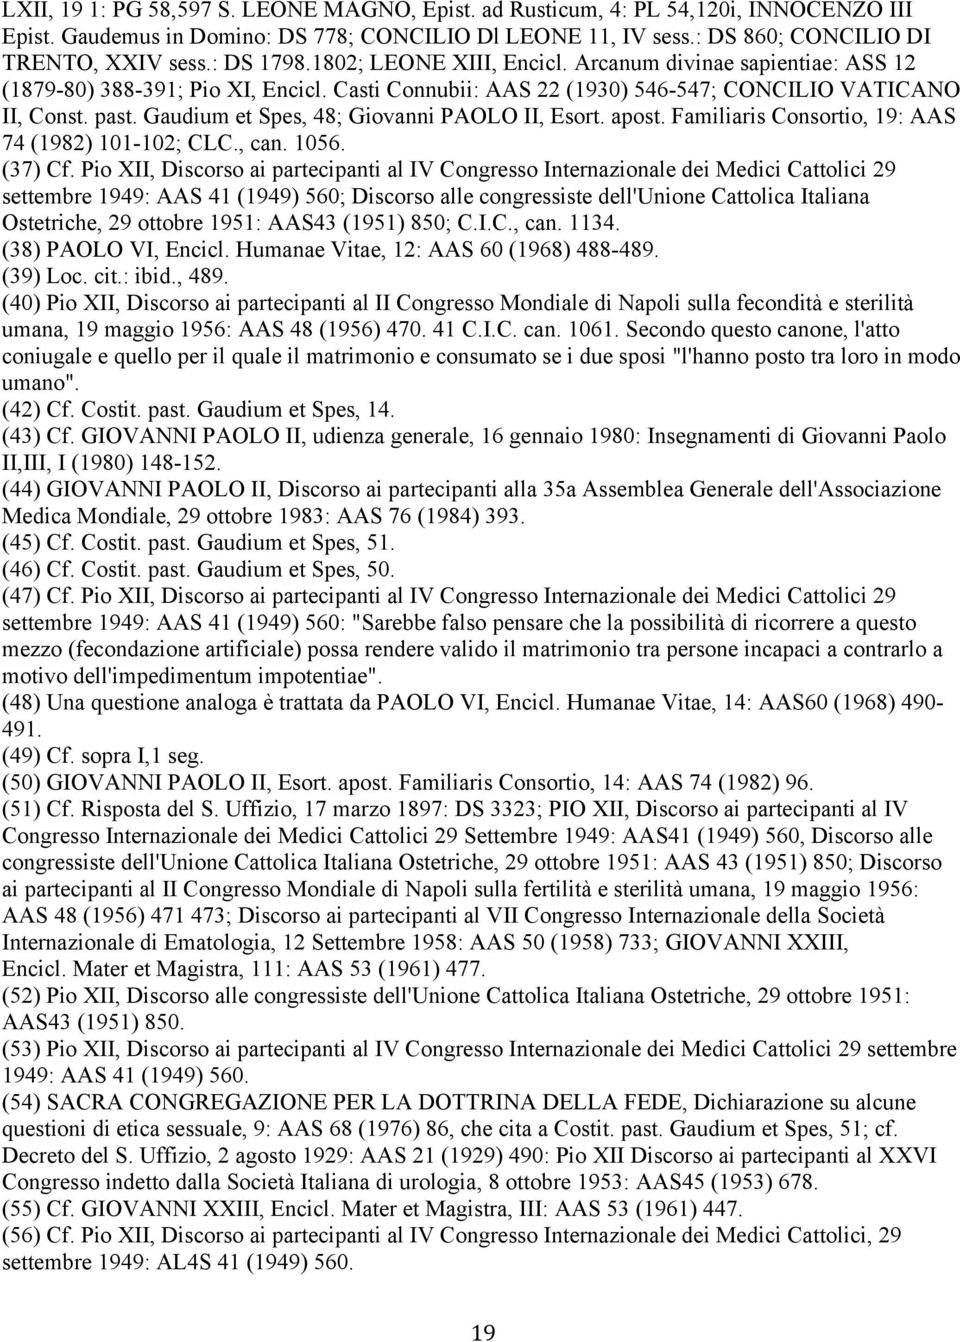 Gaudium et Spes, 48; Giovanni PAOLO II, Esort. apost. Familiaris Consortio, 19: AAS 74 (1982) 101-102; CLC., can. 1056. (37) Cf.